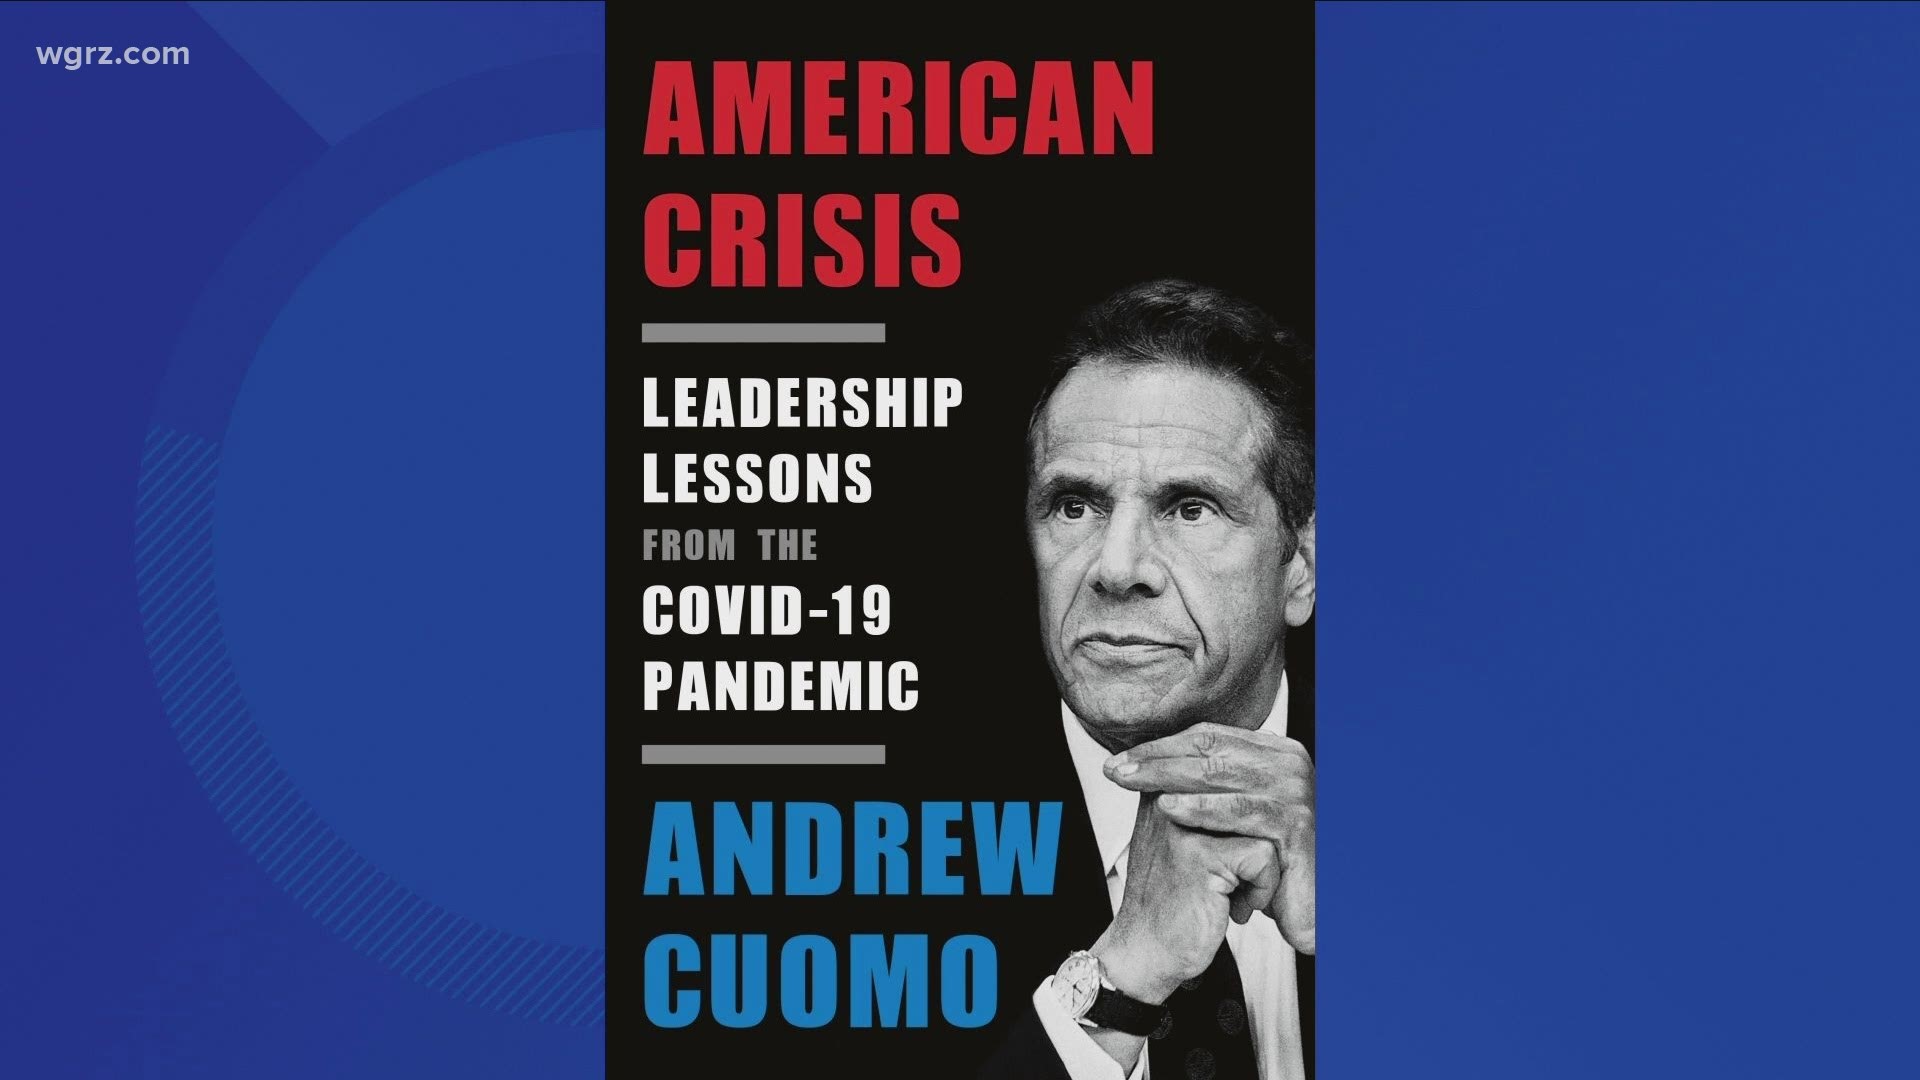 Cuomo's book now part of the impeachment probe